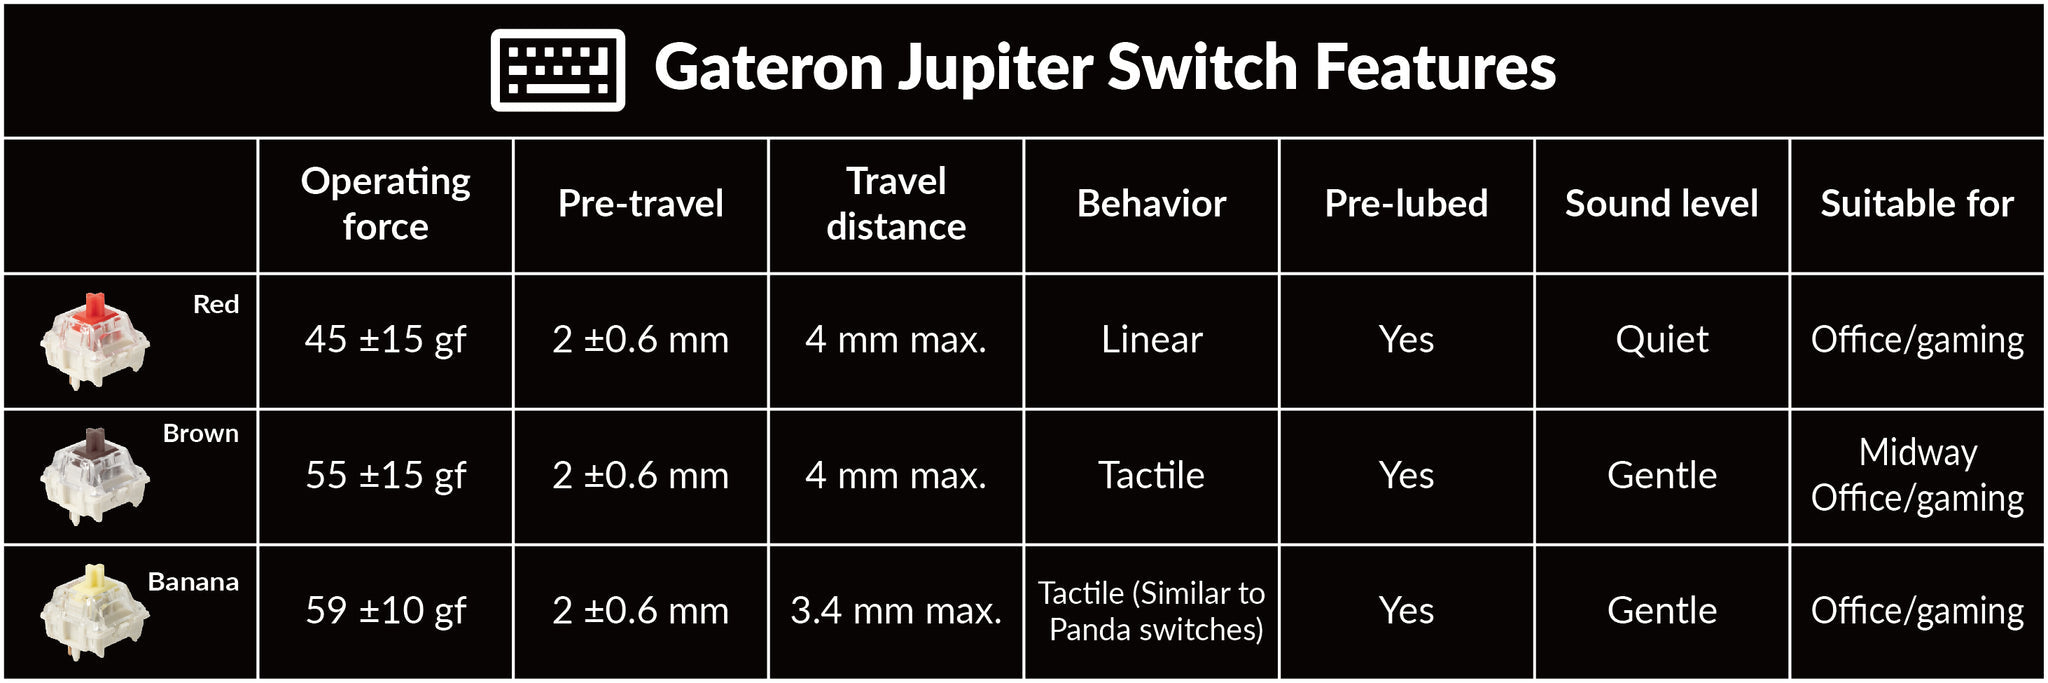 Gateron Jupiter Switch